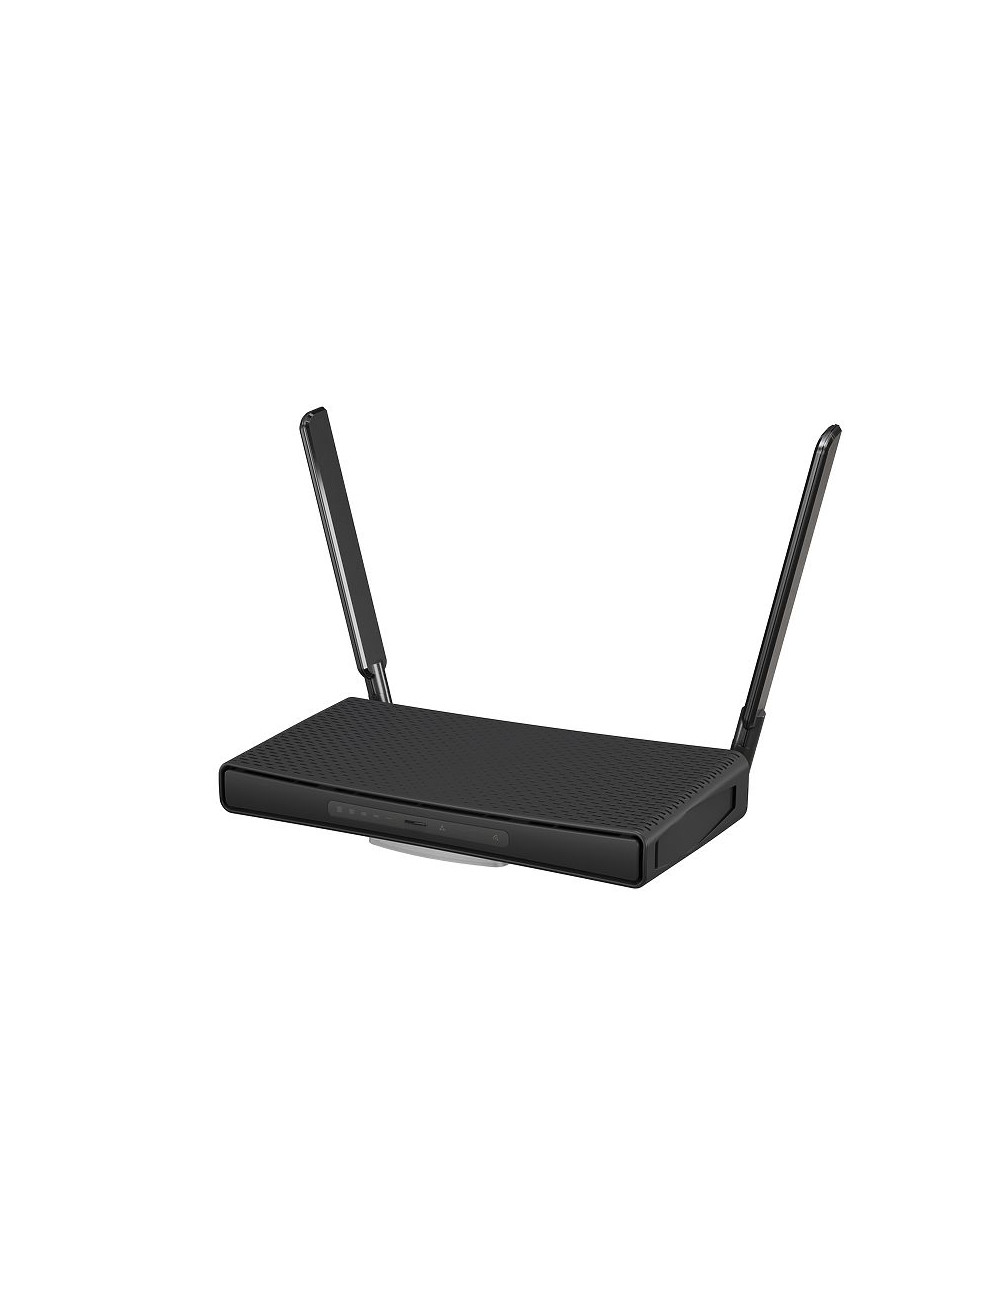 MikroTik Wireless Router HAP AC3 802.11ac, 300+867 Mbit/s, 10/100/1000 Mbit/s, Ethernet LAN (RJ-45) ports 5, Antenna type 2xExte